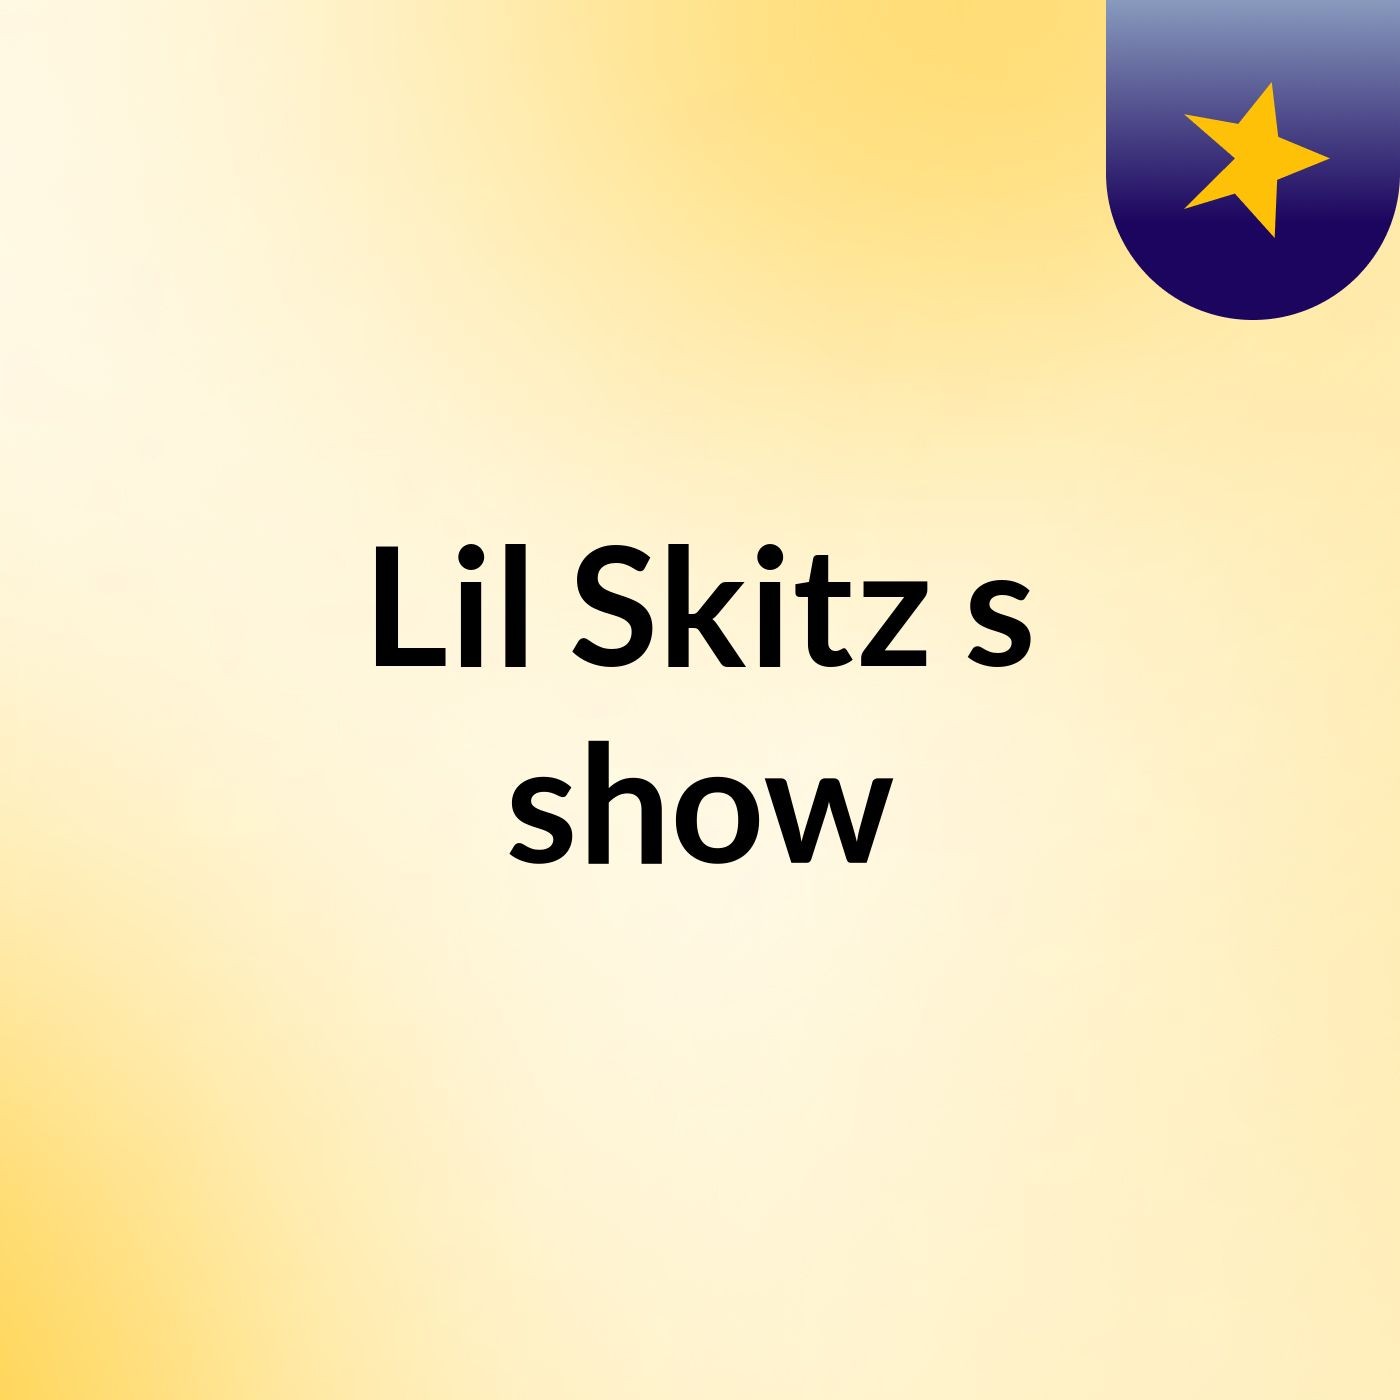 Lil Skitz's show